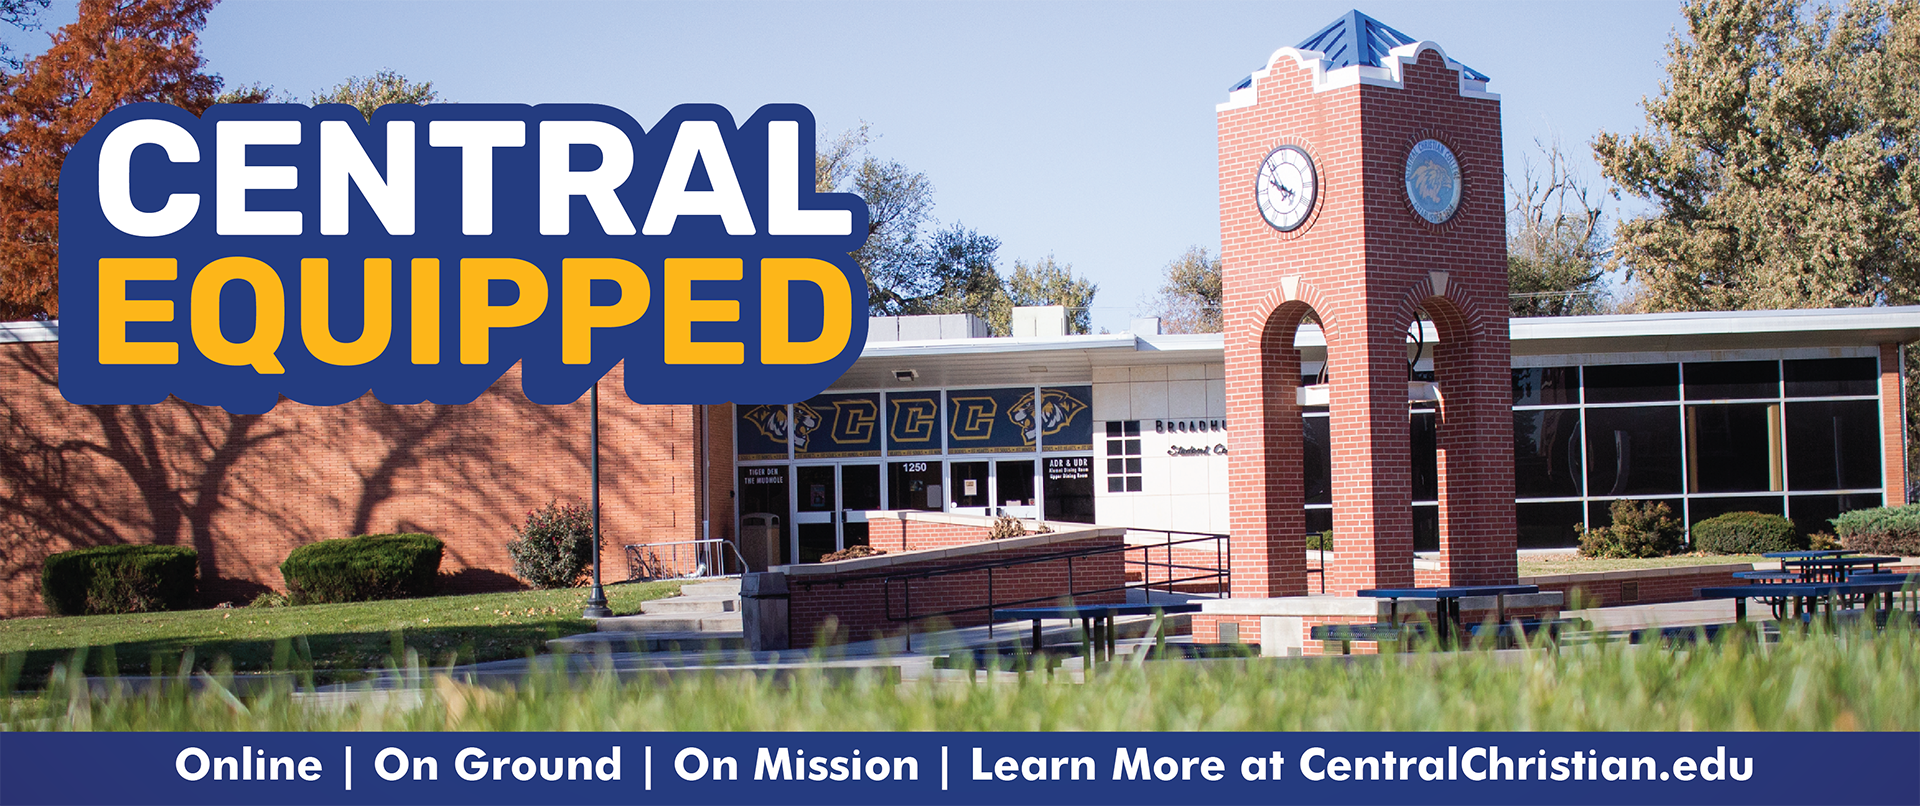 Associates - Central Christian College of Kansas